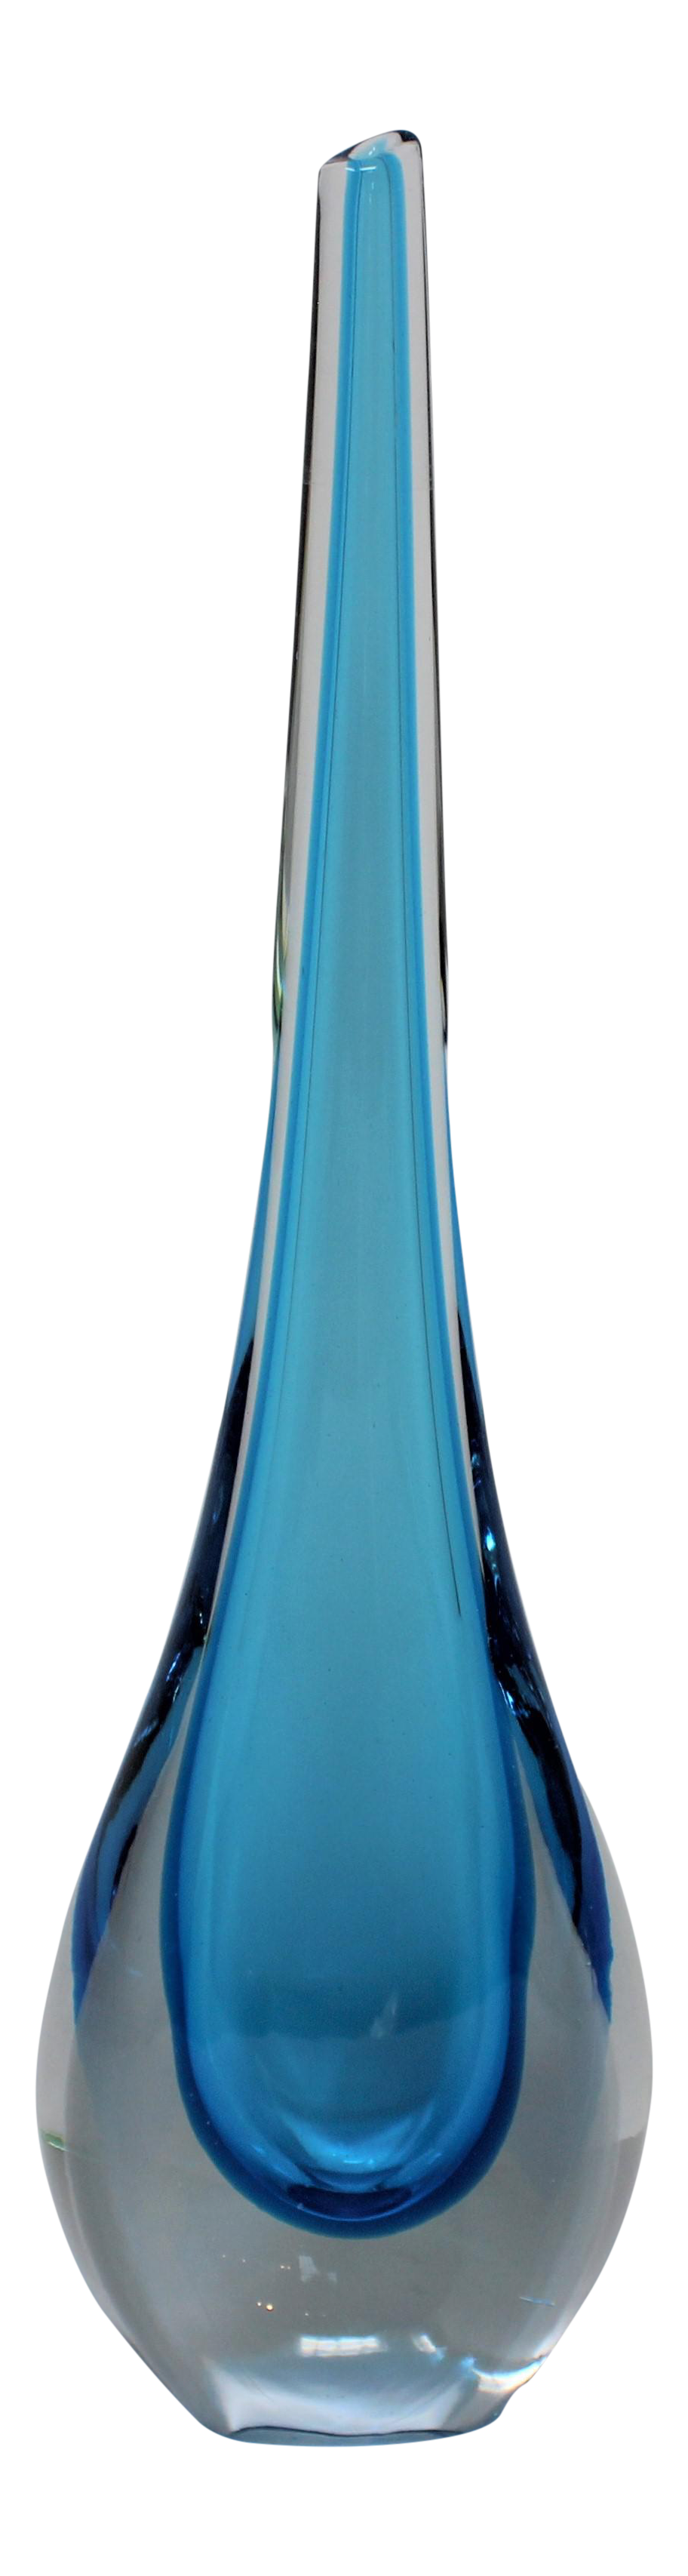 Gocci Murano Glass Vase by Roberto Beltrami